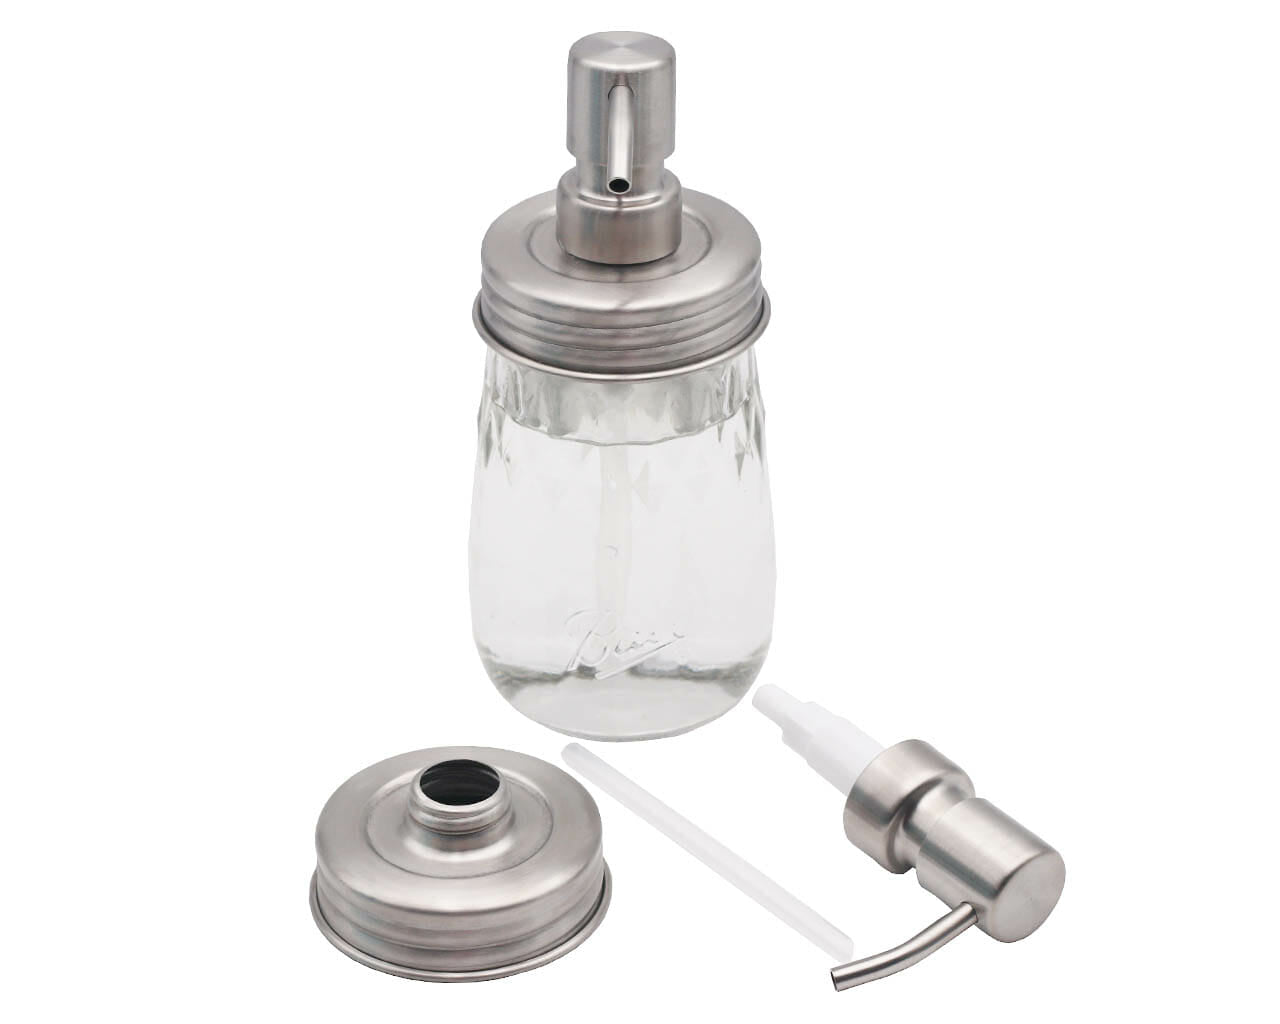 Satin / Brushed Finish Soap Pump Dispensers for Mason Jars